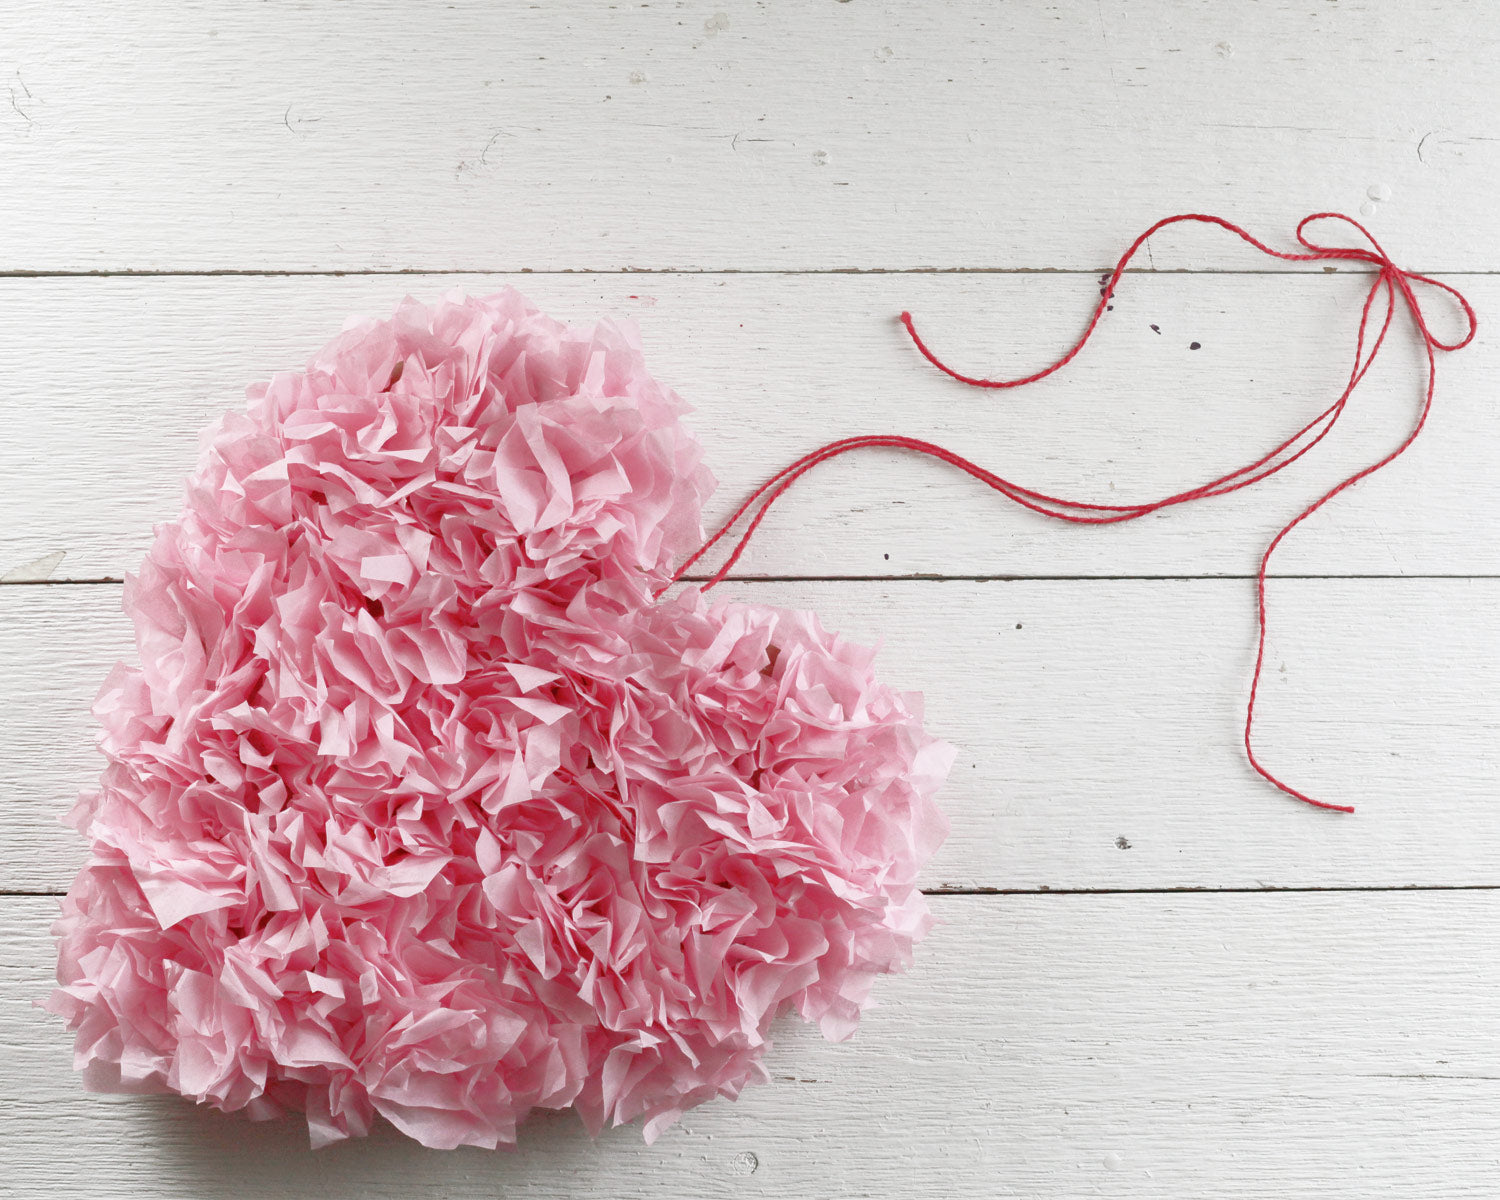 Tissue Paper Puffy Heart Valentine's Window Decoration - DIY Papercraft